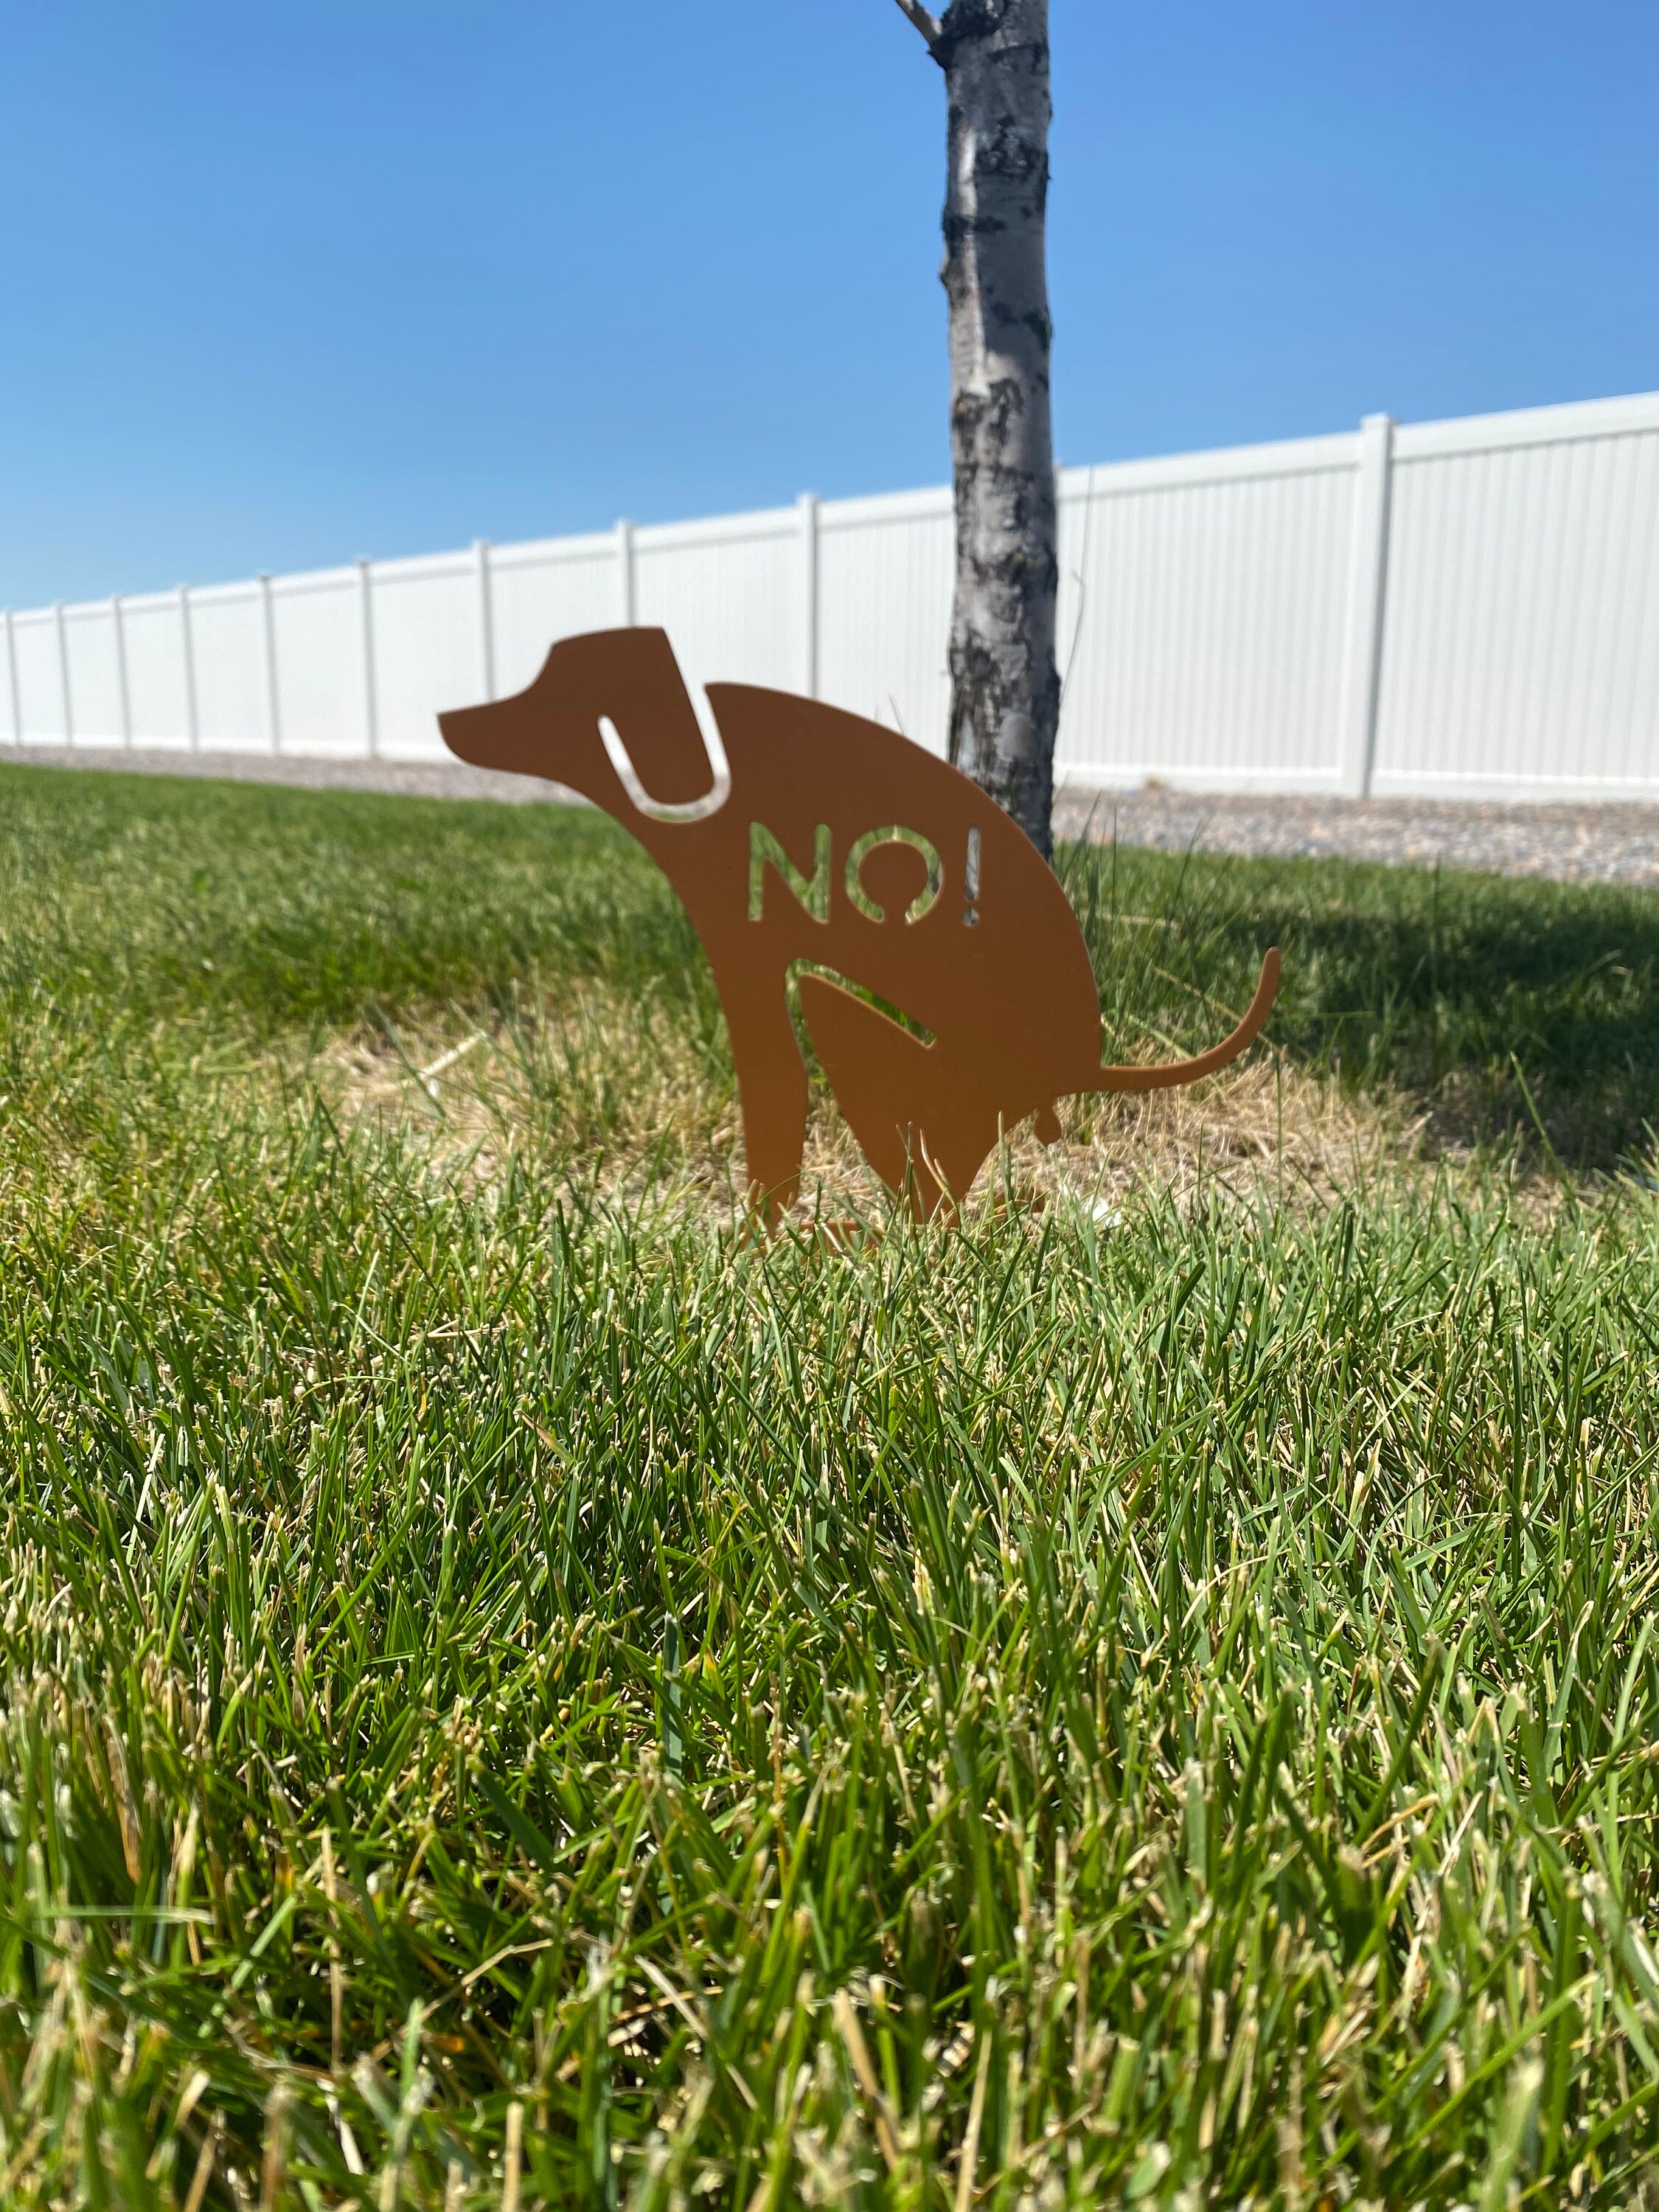 No Dog Poop Yard Sign Etsy